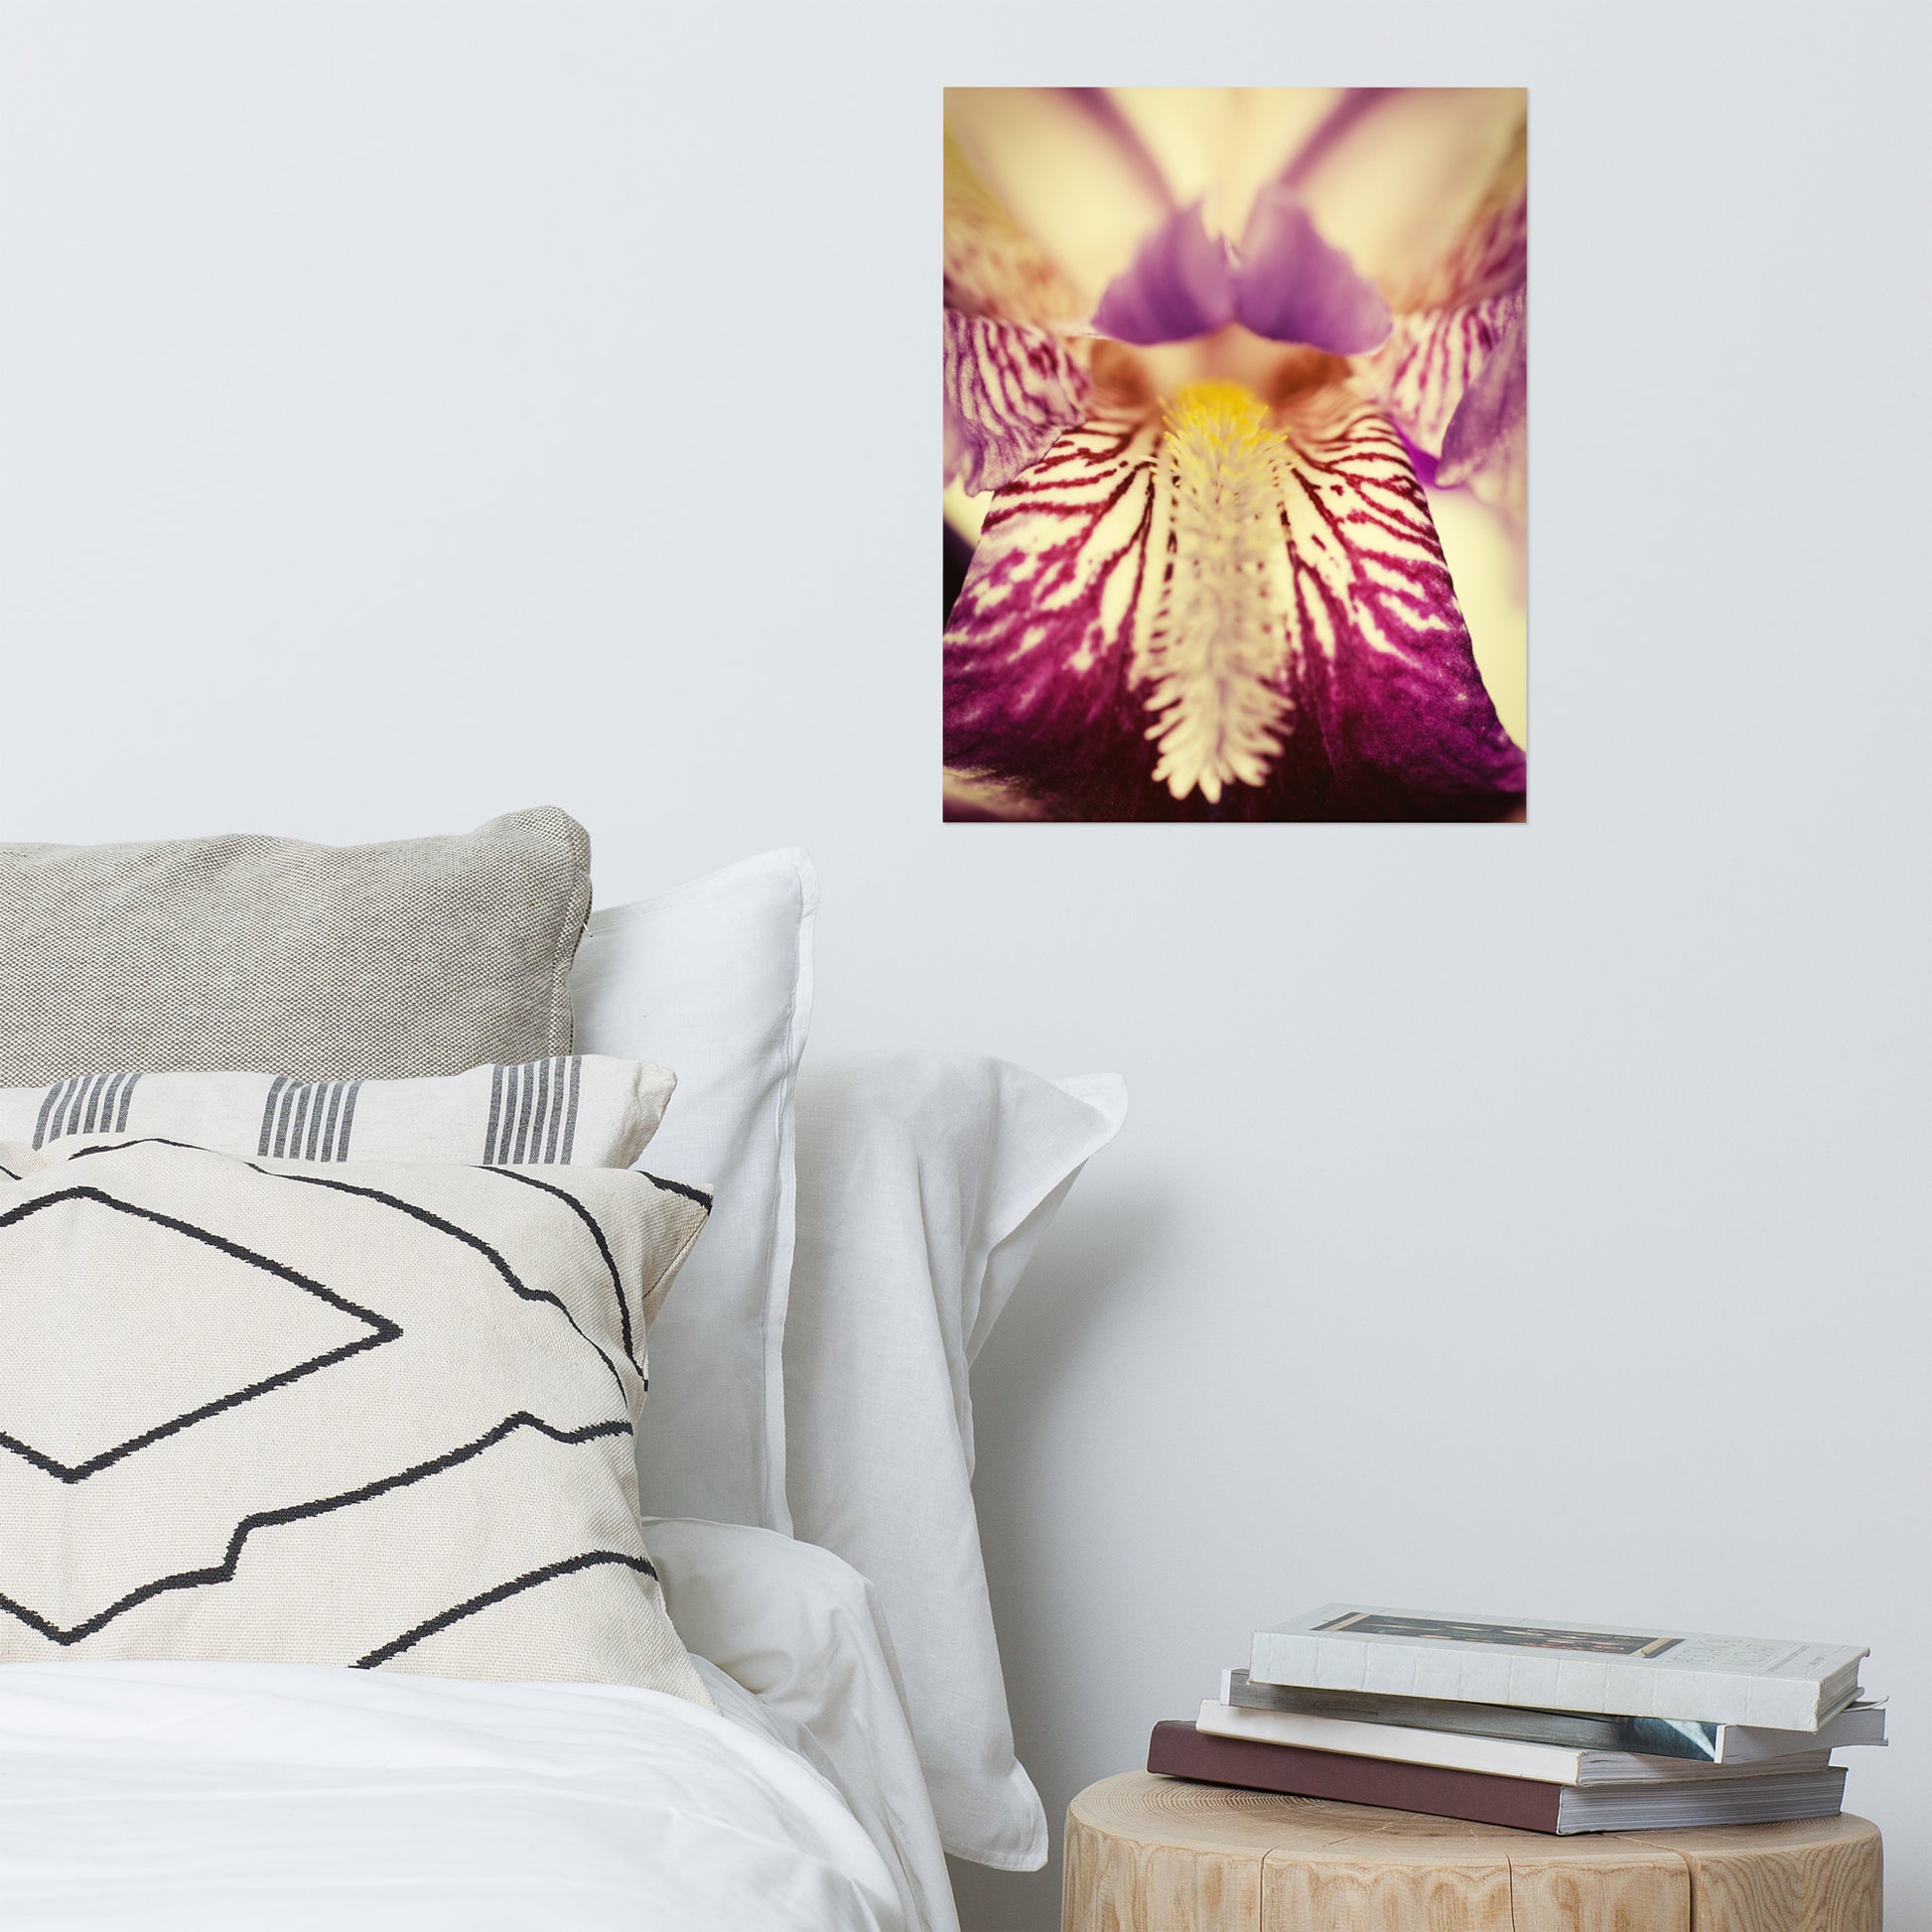 Floral Picture Prints: Antiqued Iris - Botanical / Floral / Flora / Flowers / Nature Photograph Loose / Unframed / Frameless / Frameable Wall Art Print - Artwork